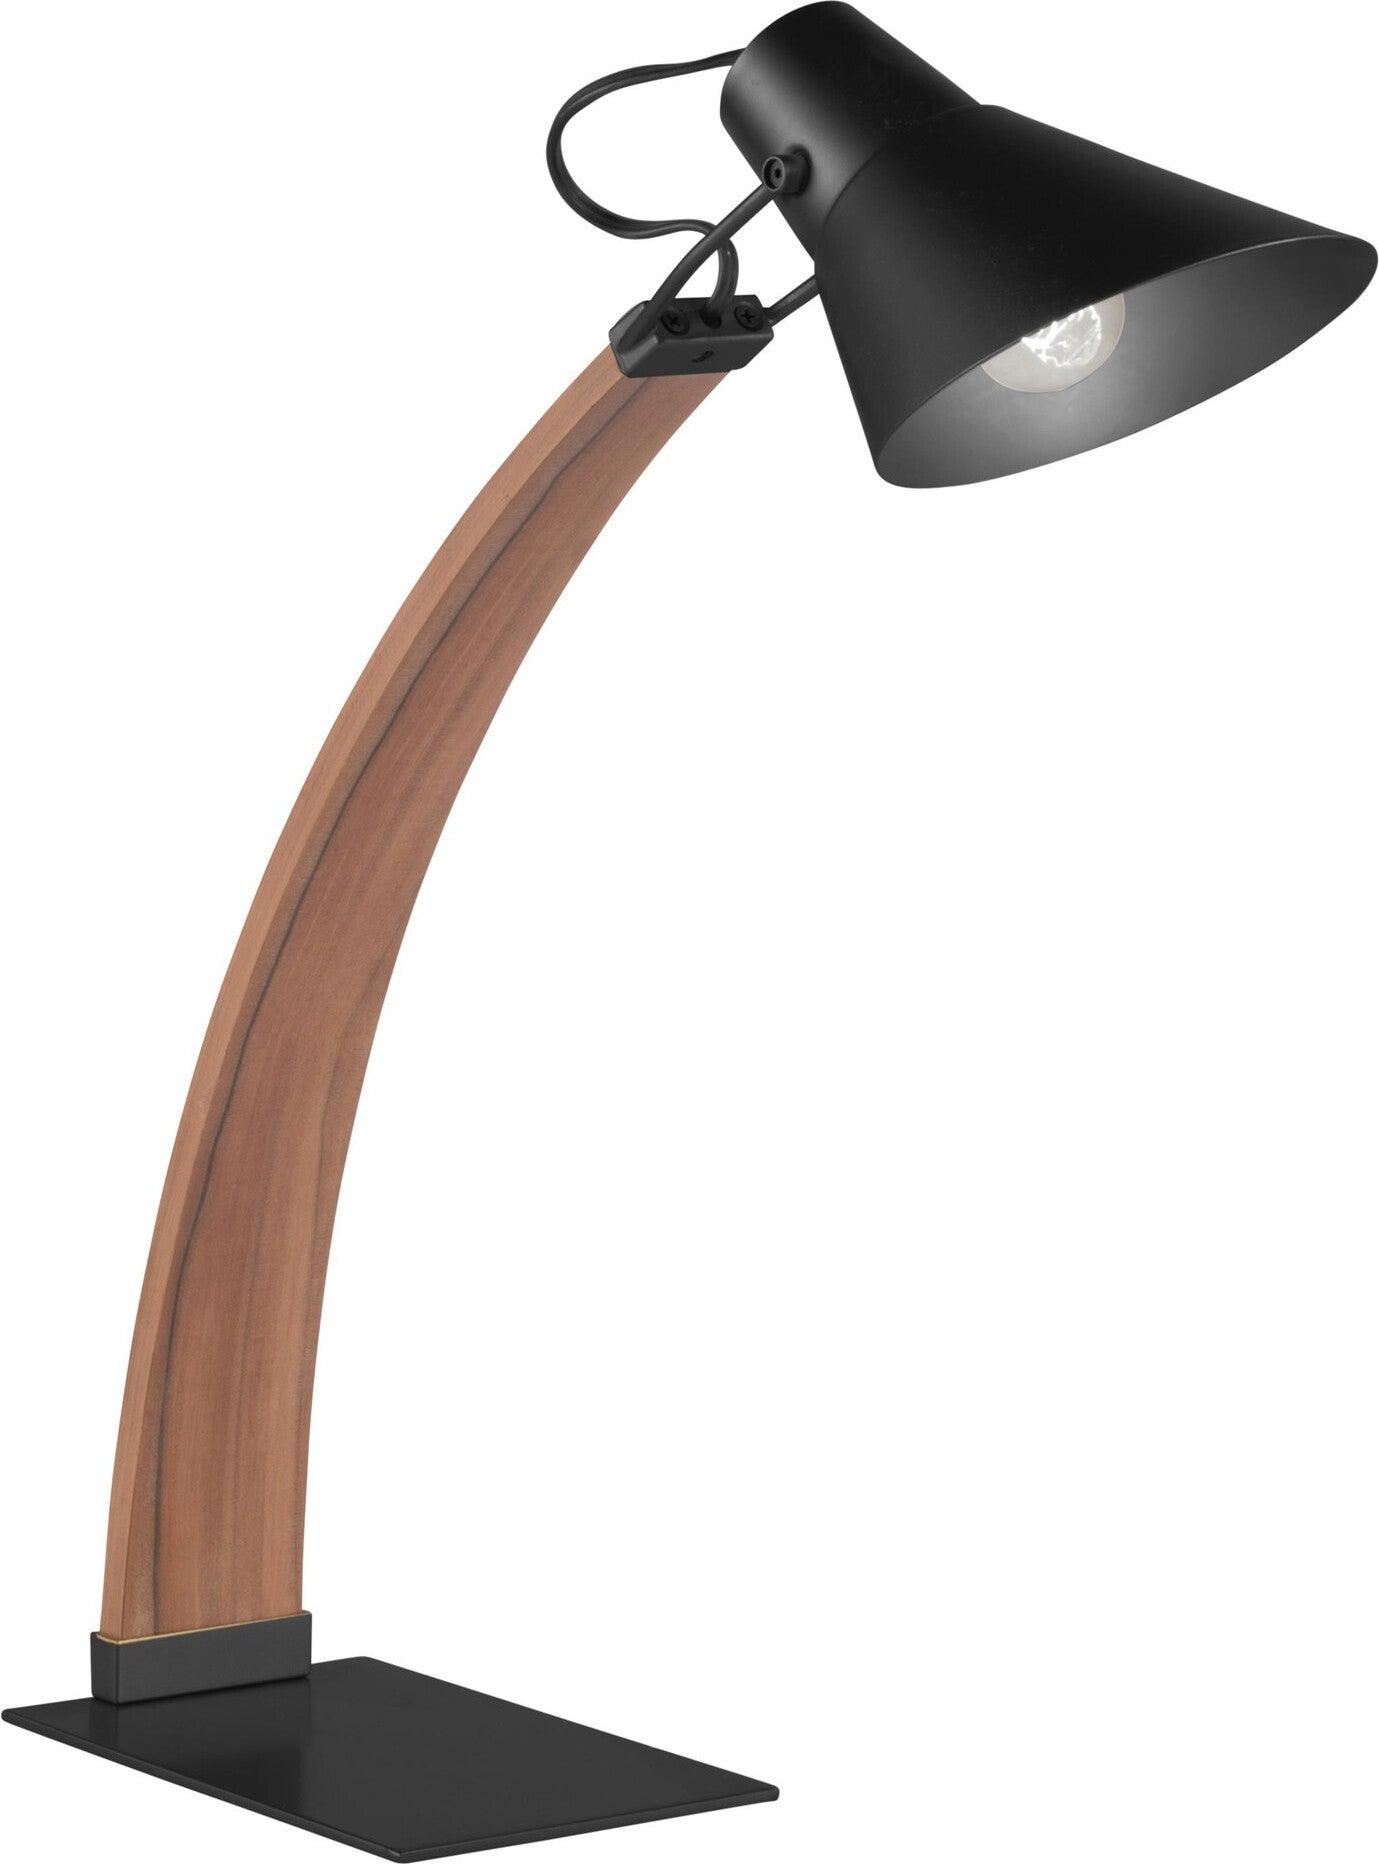 Lumisource Table Lamps - Noah Table Lamp Apple & Black